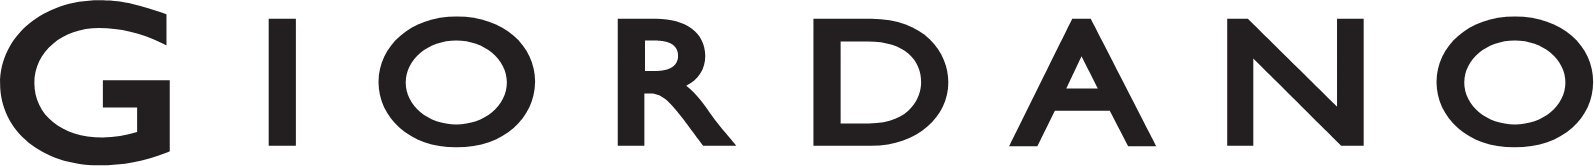 Giordano logo large (transparent PNG)